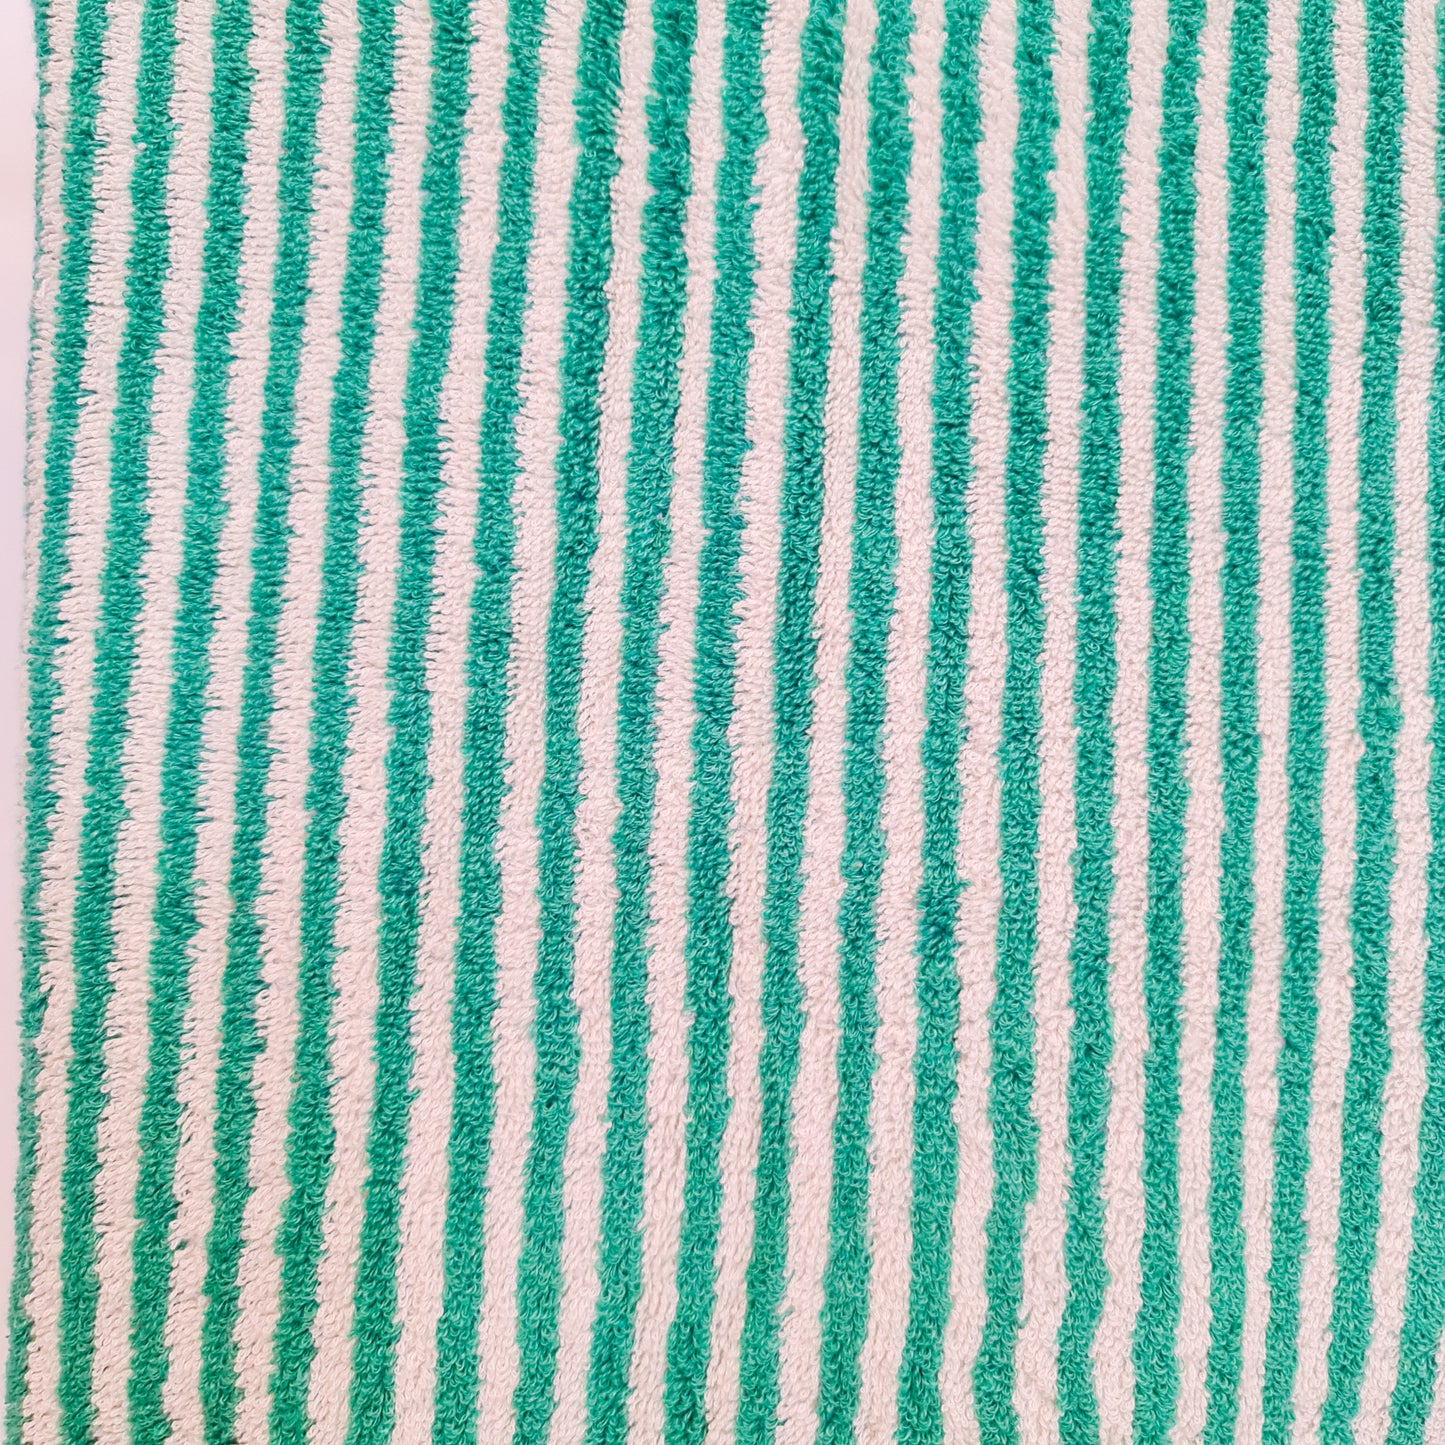 Turkish Hammam Bath Terry Towels Green Stripe